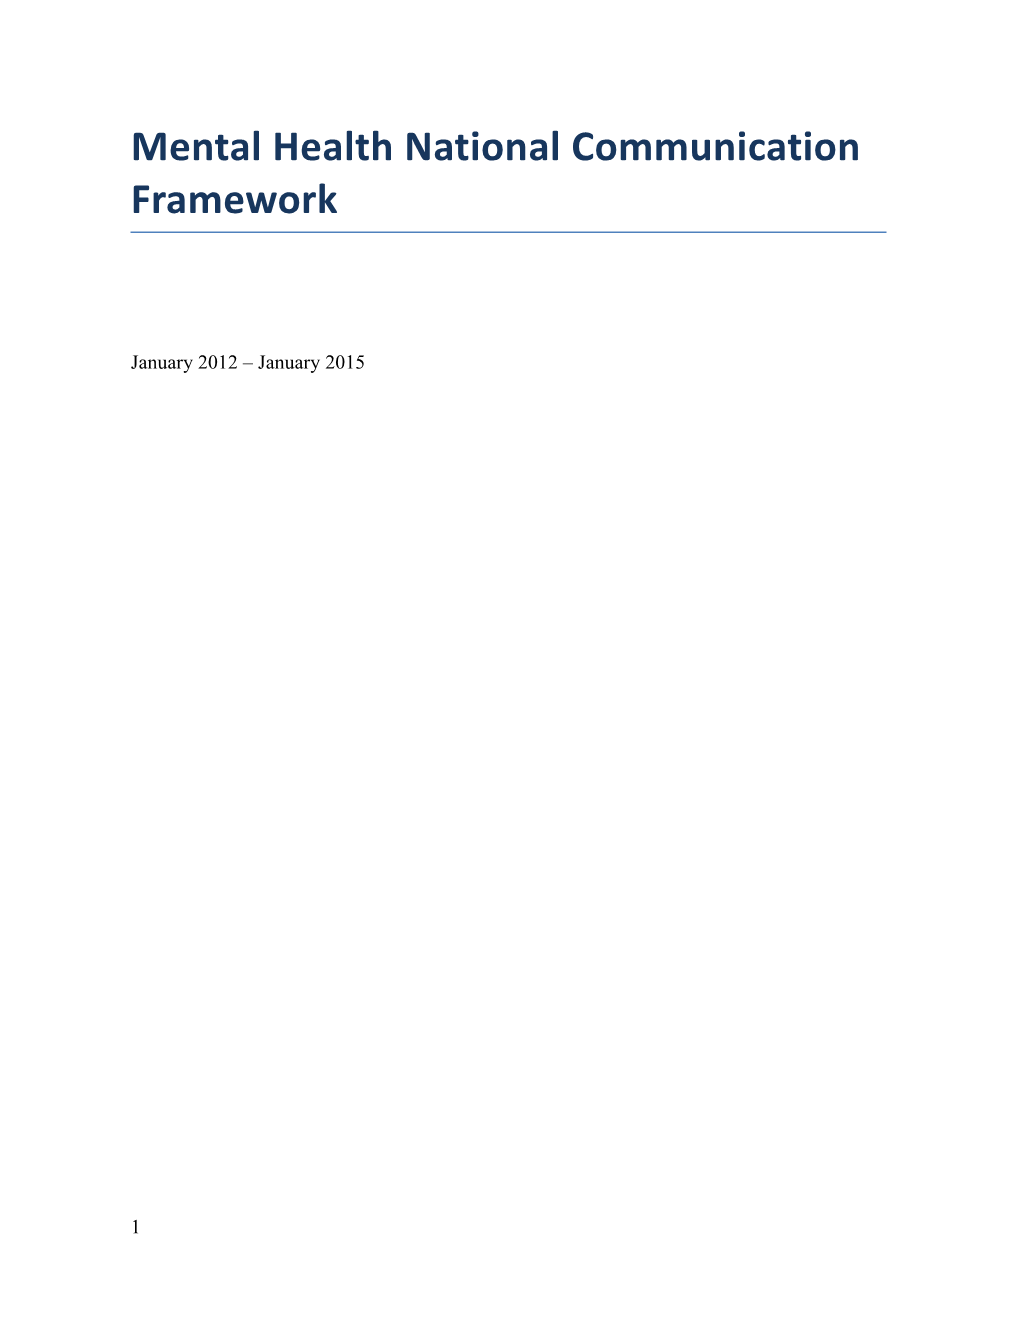 Mental Health National Communication Framework